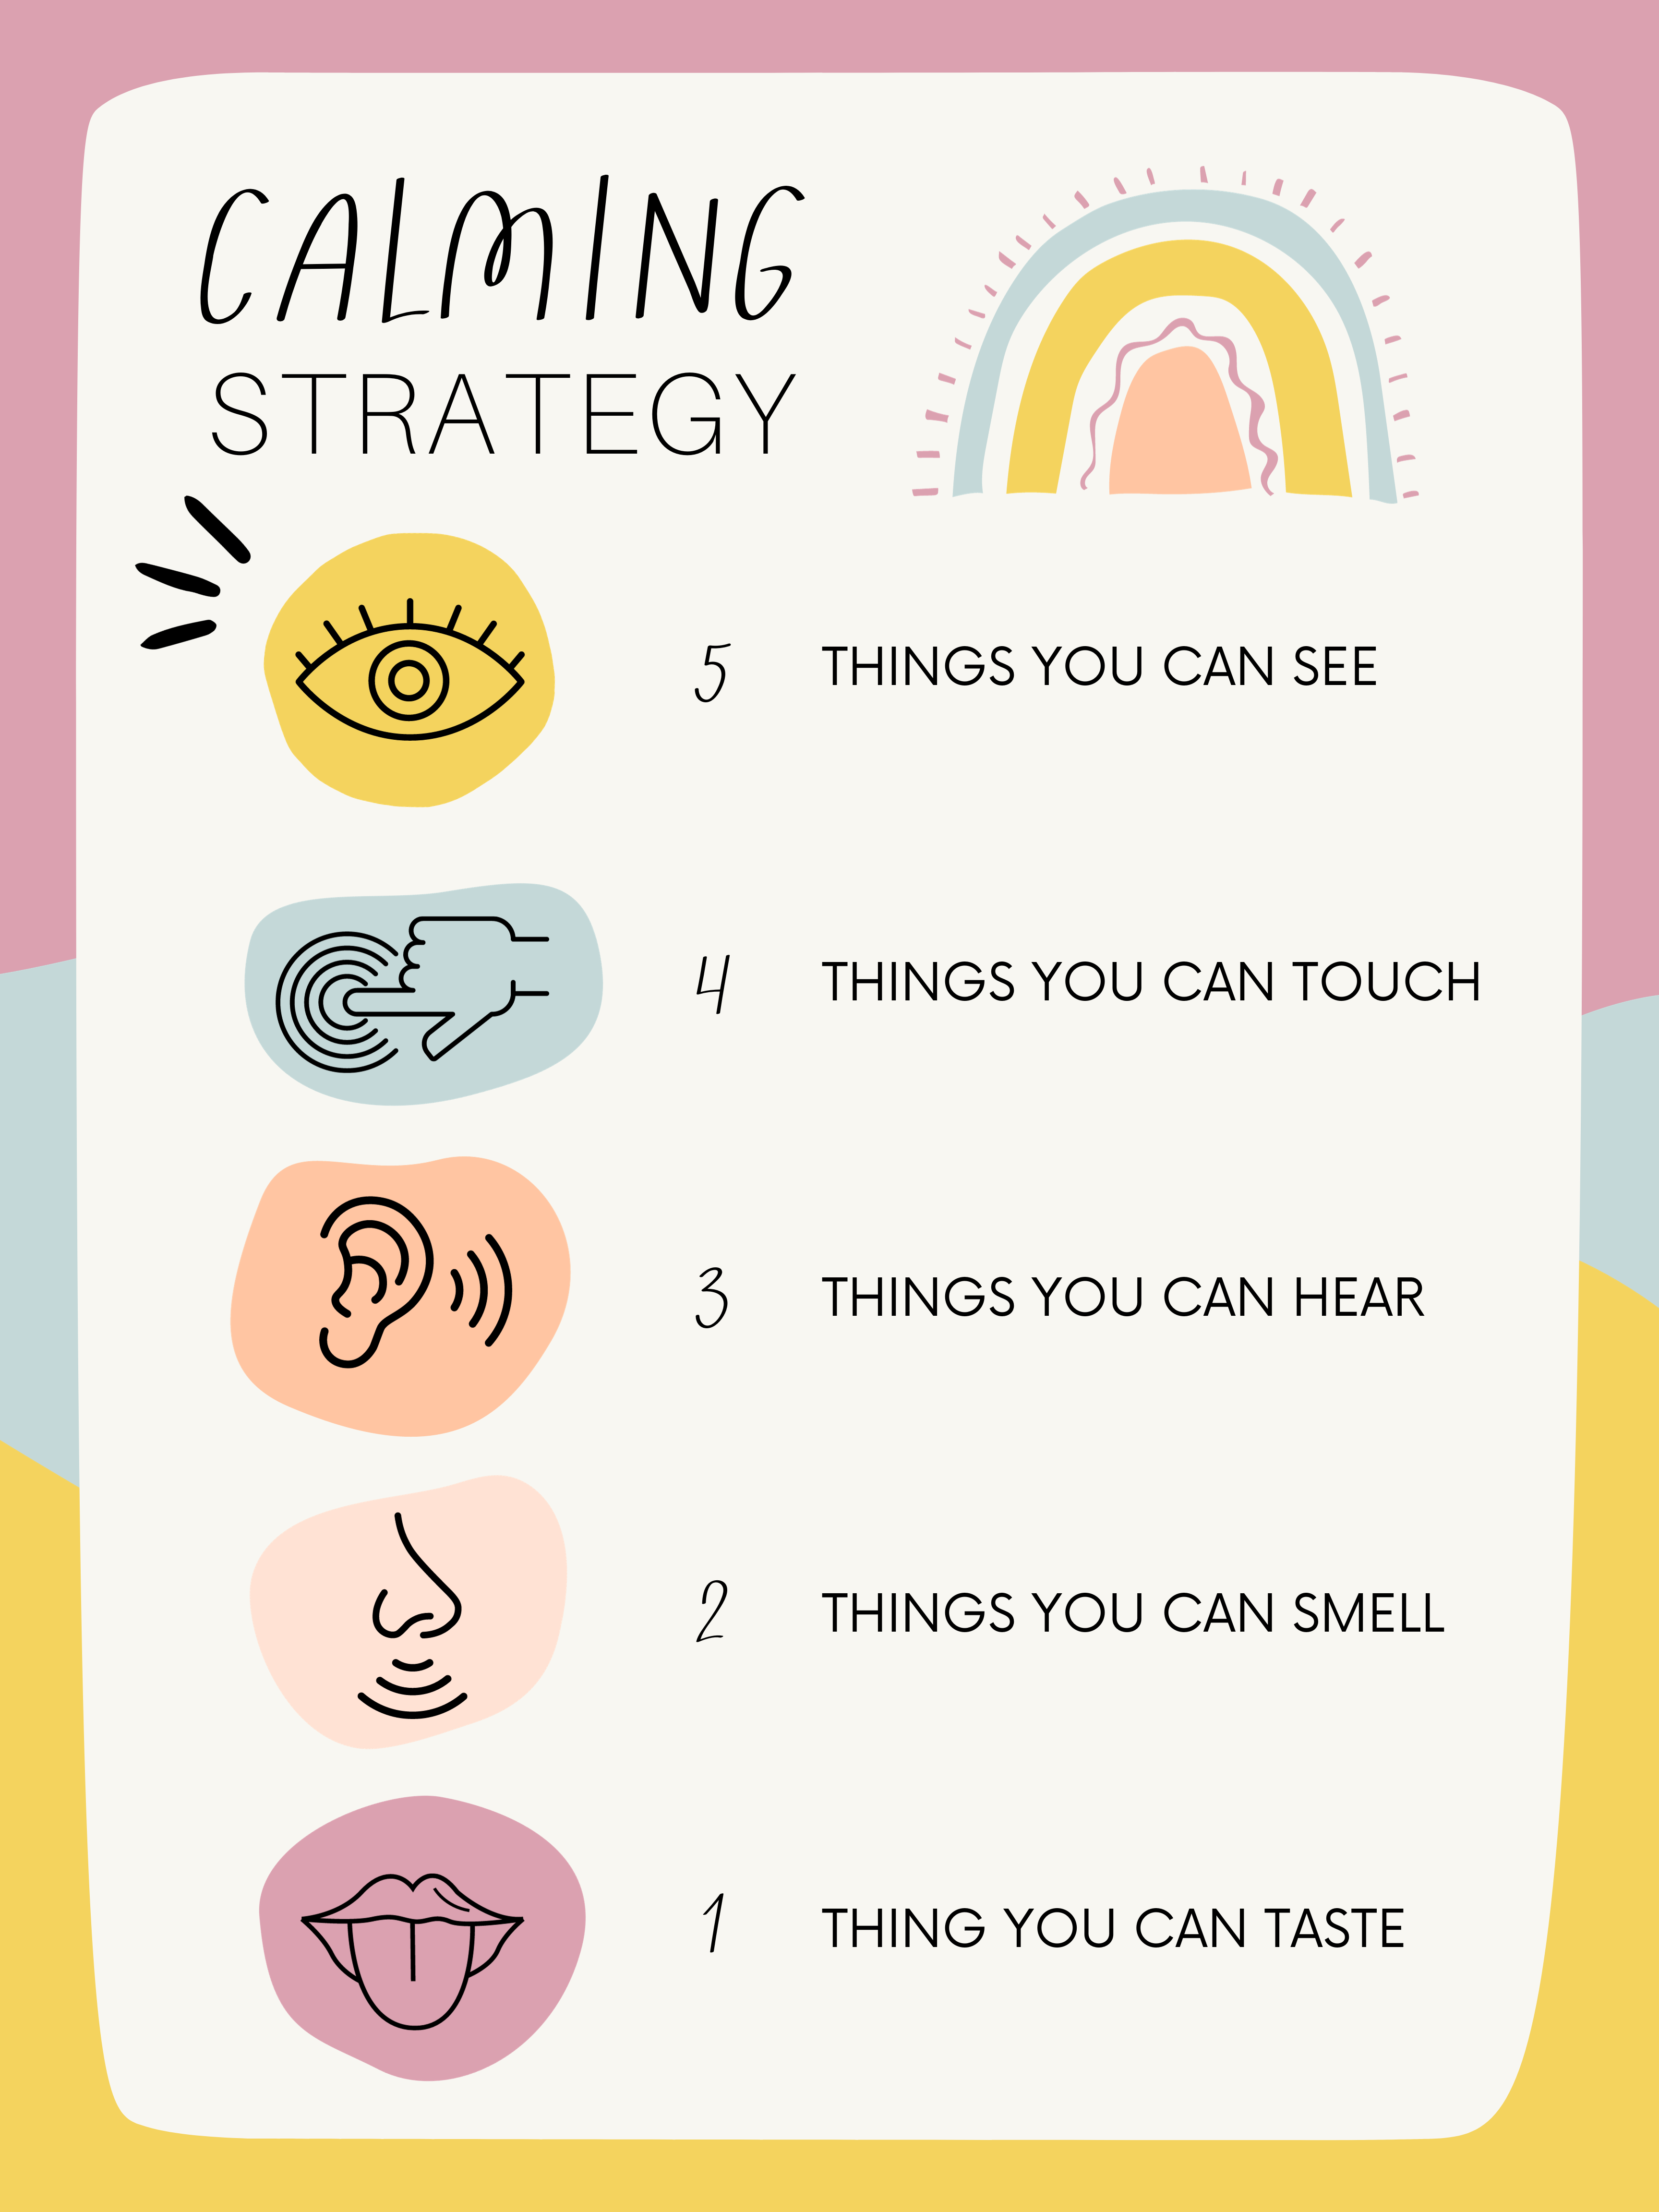 Ways to Calm